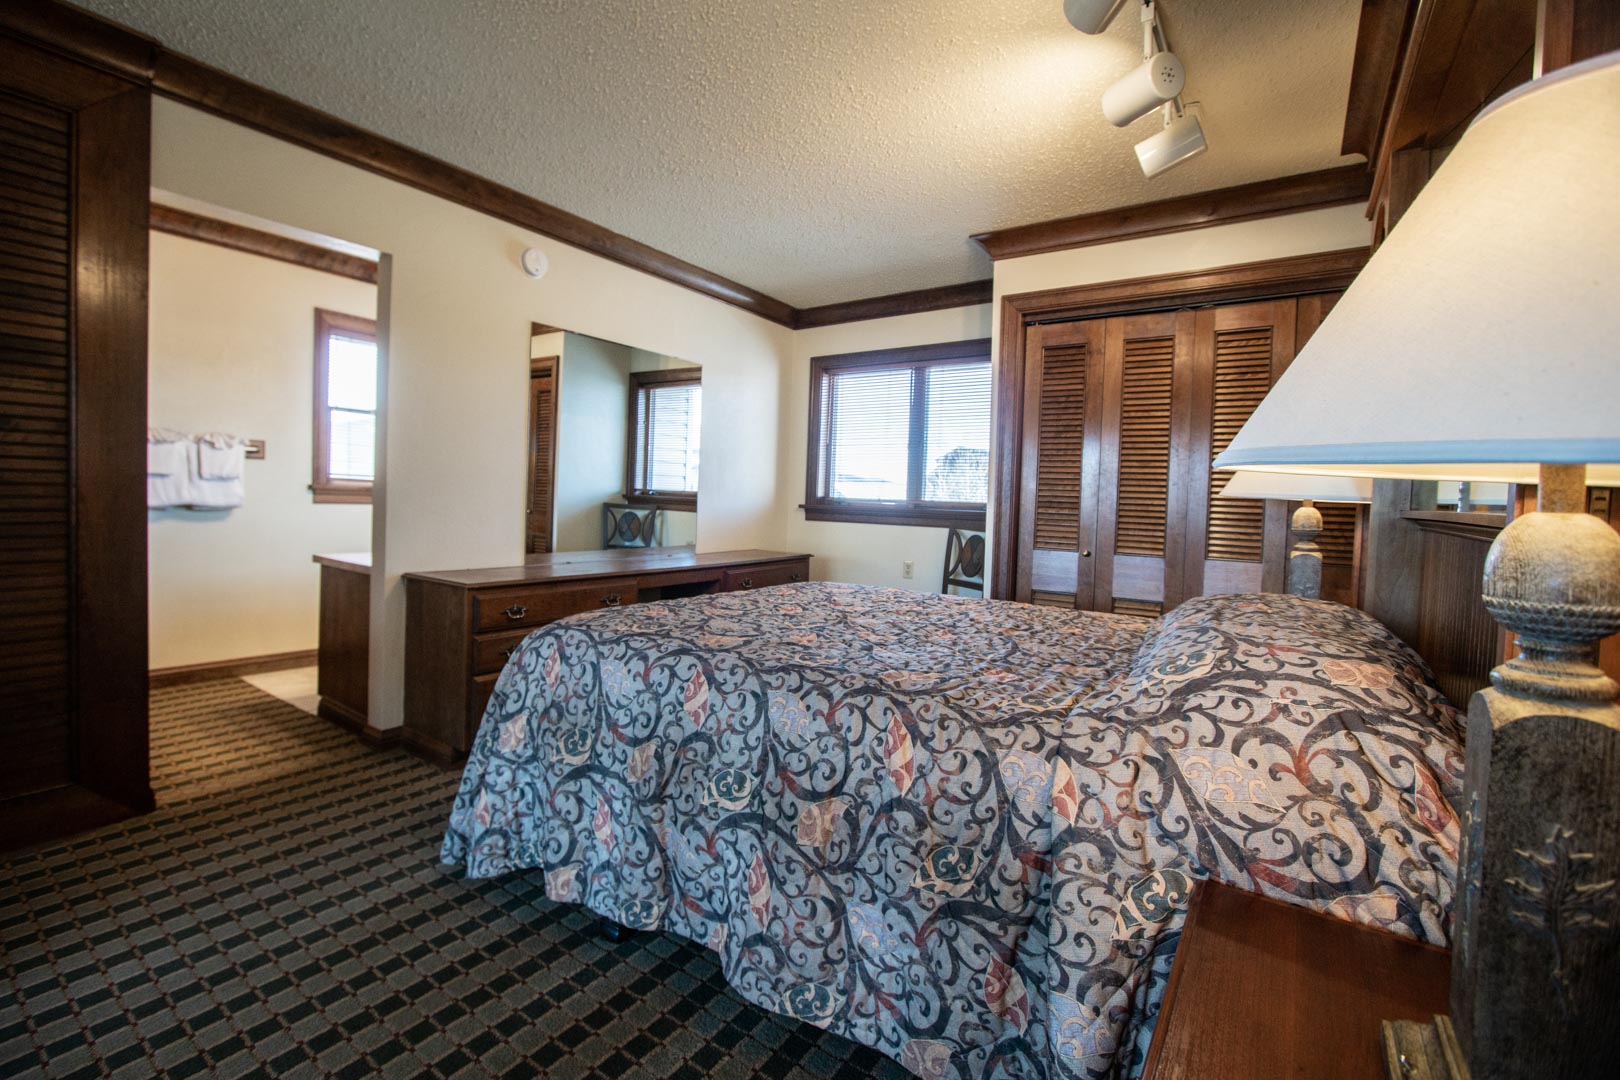 A spacious master bedroom at VRI's Sunburst Resort in Steamboat Springs, CO.